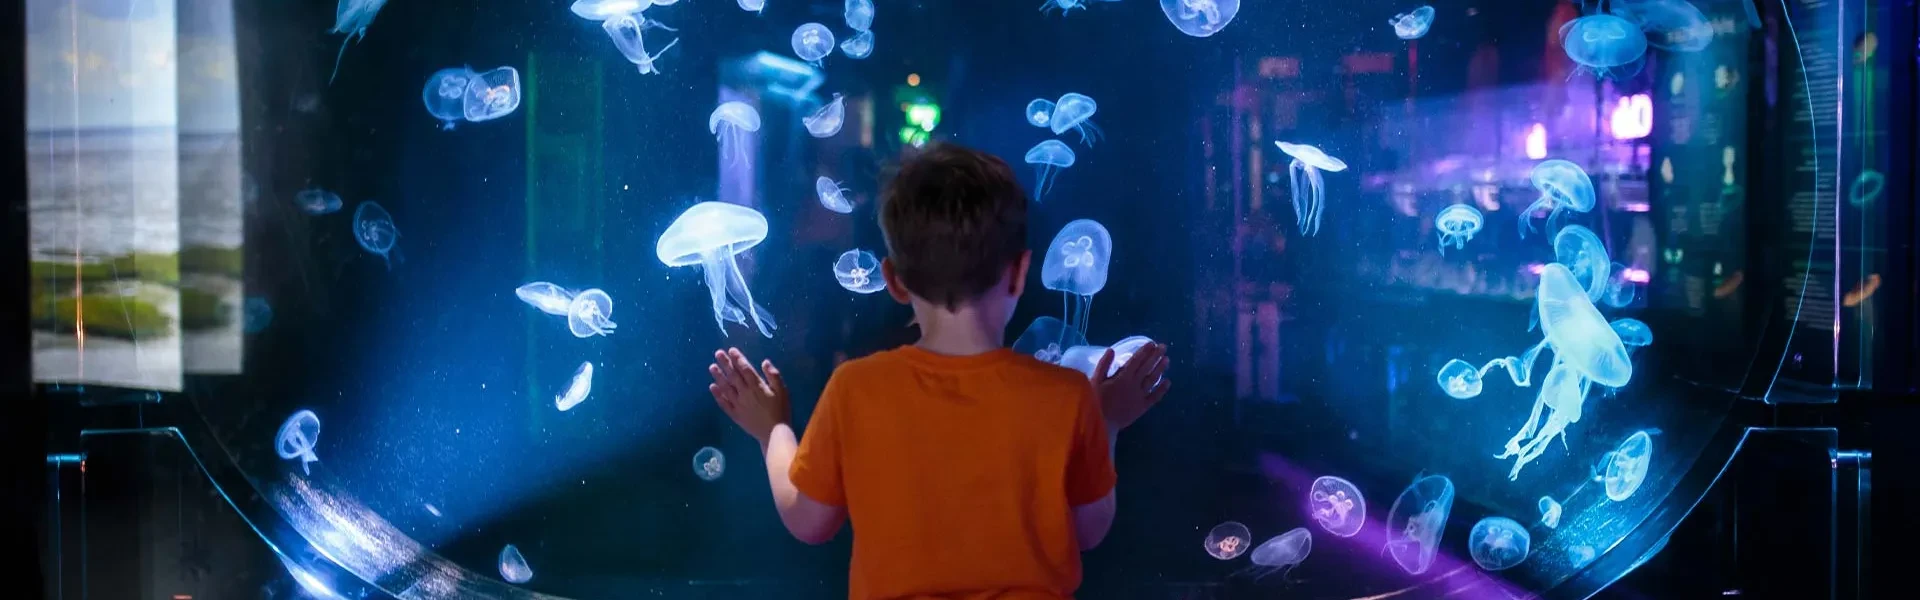 The Deep Jellyfish